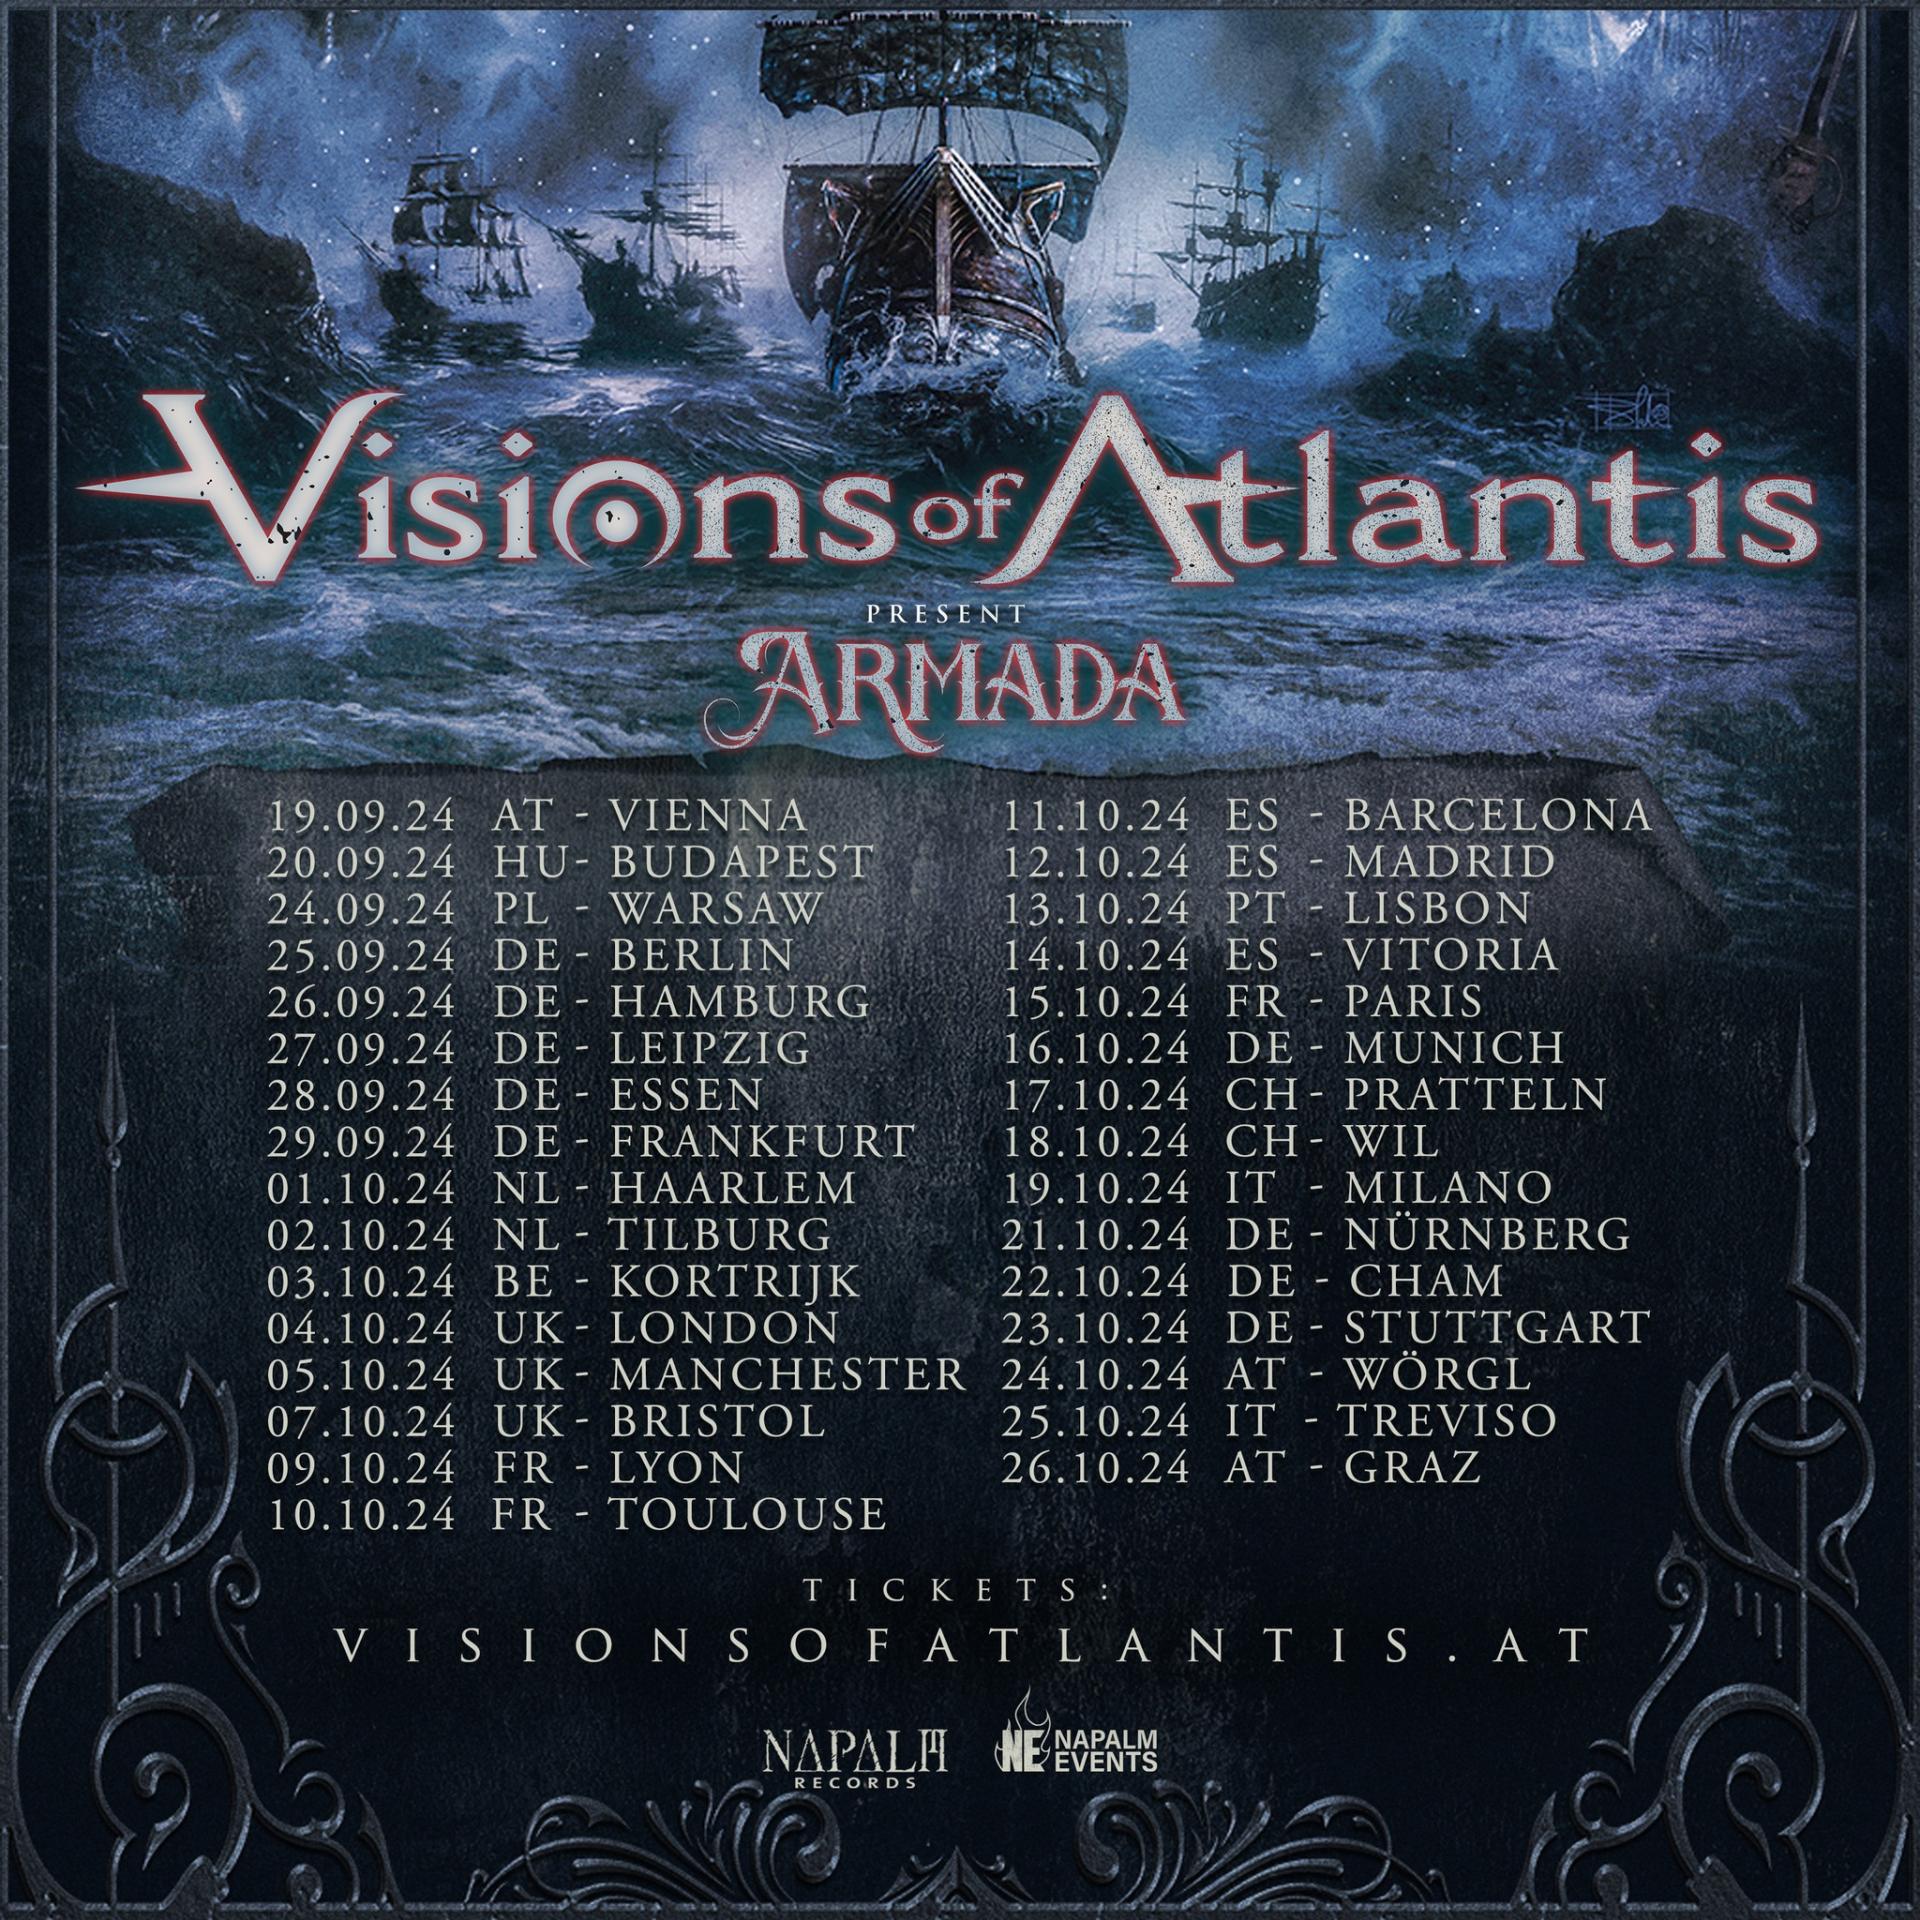 Visions of atlantis armada tour